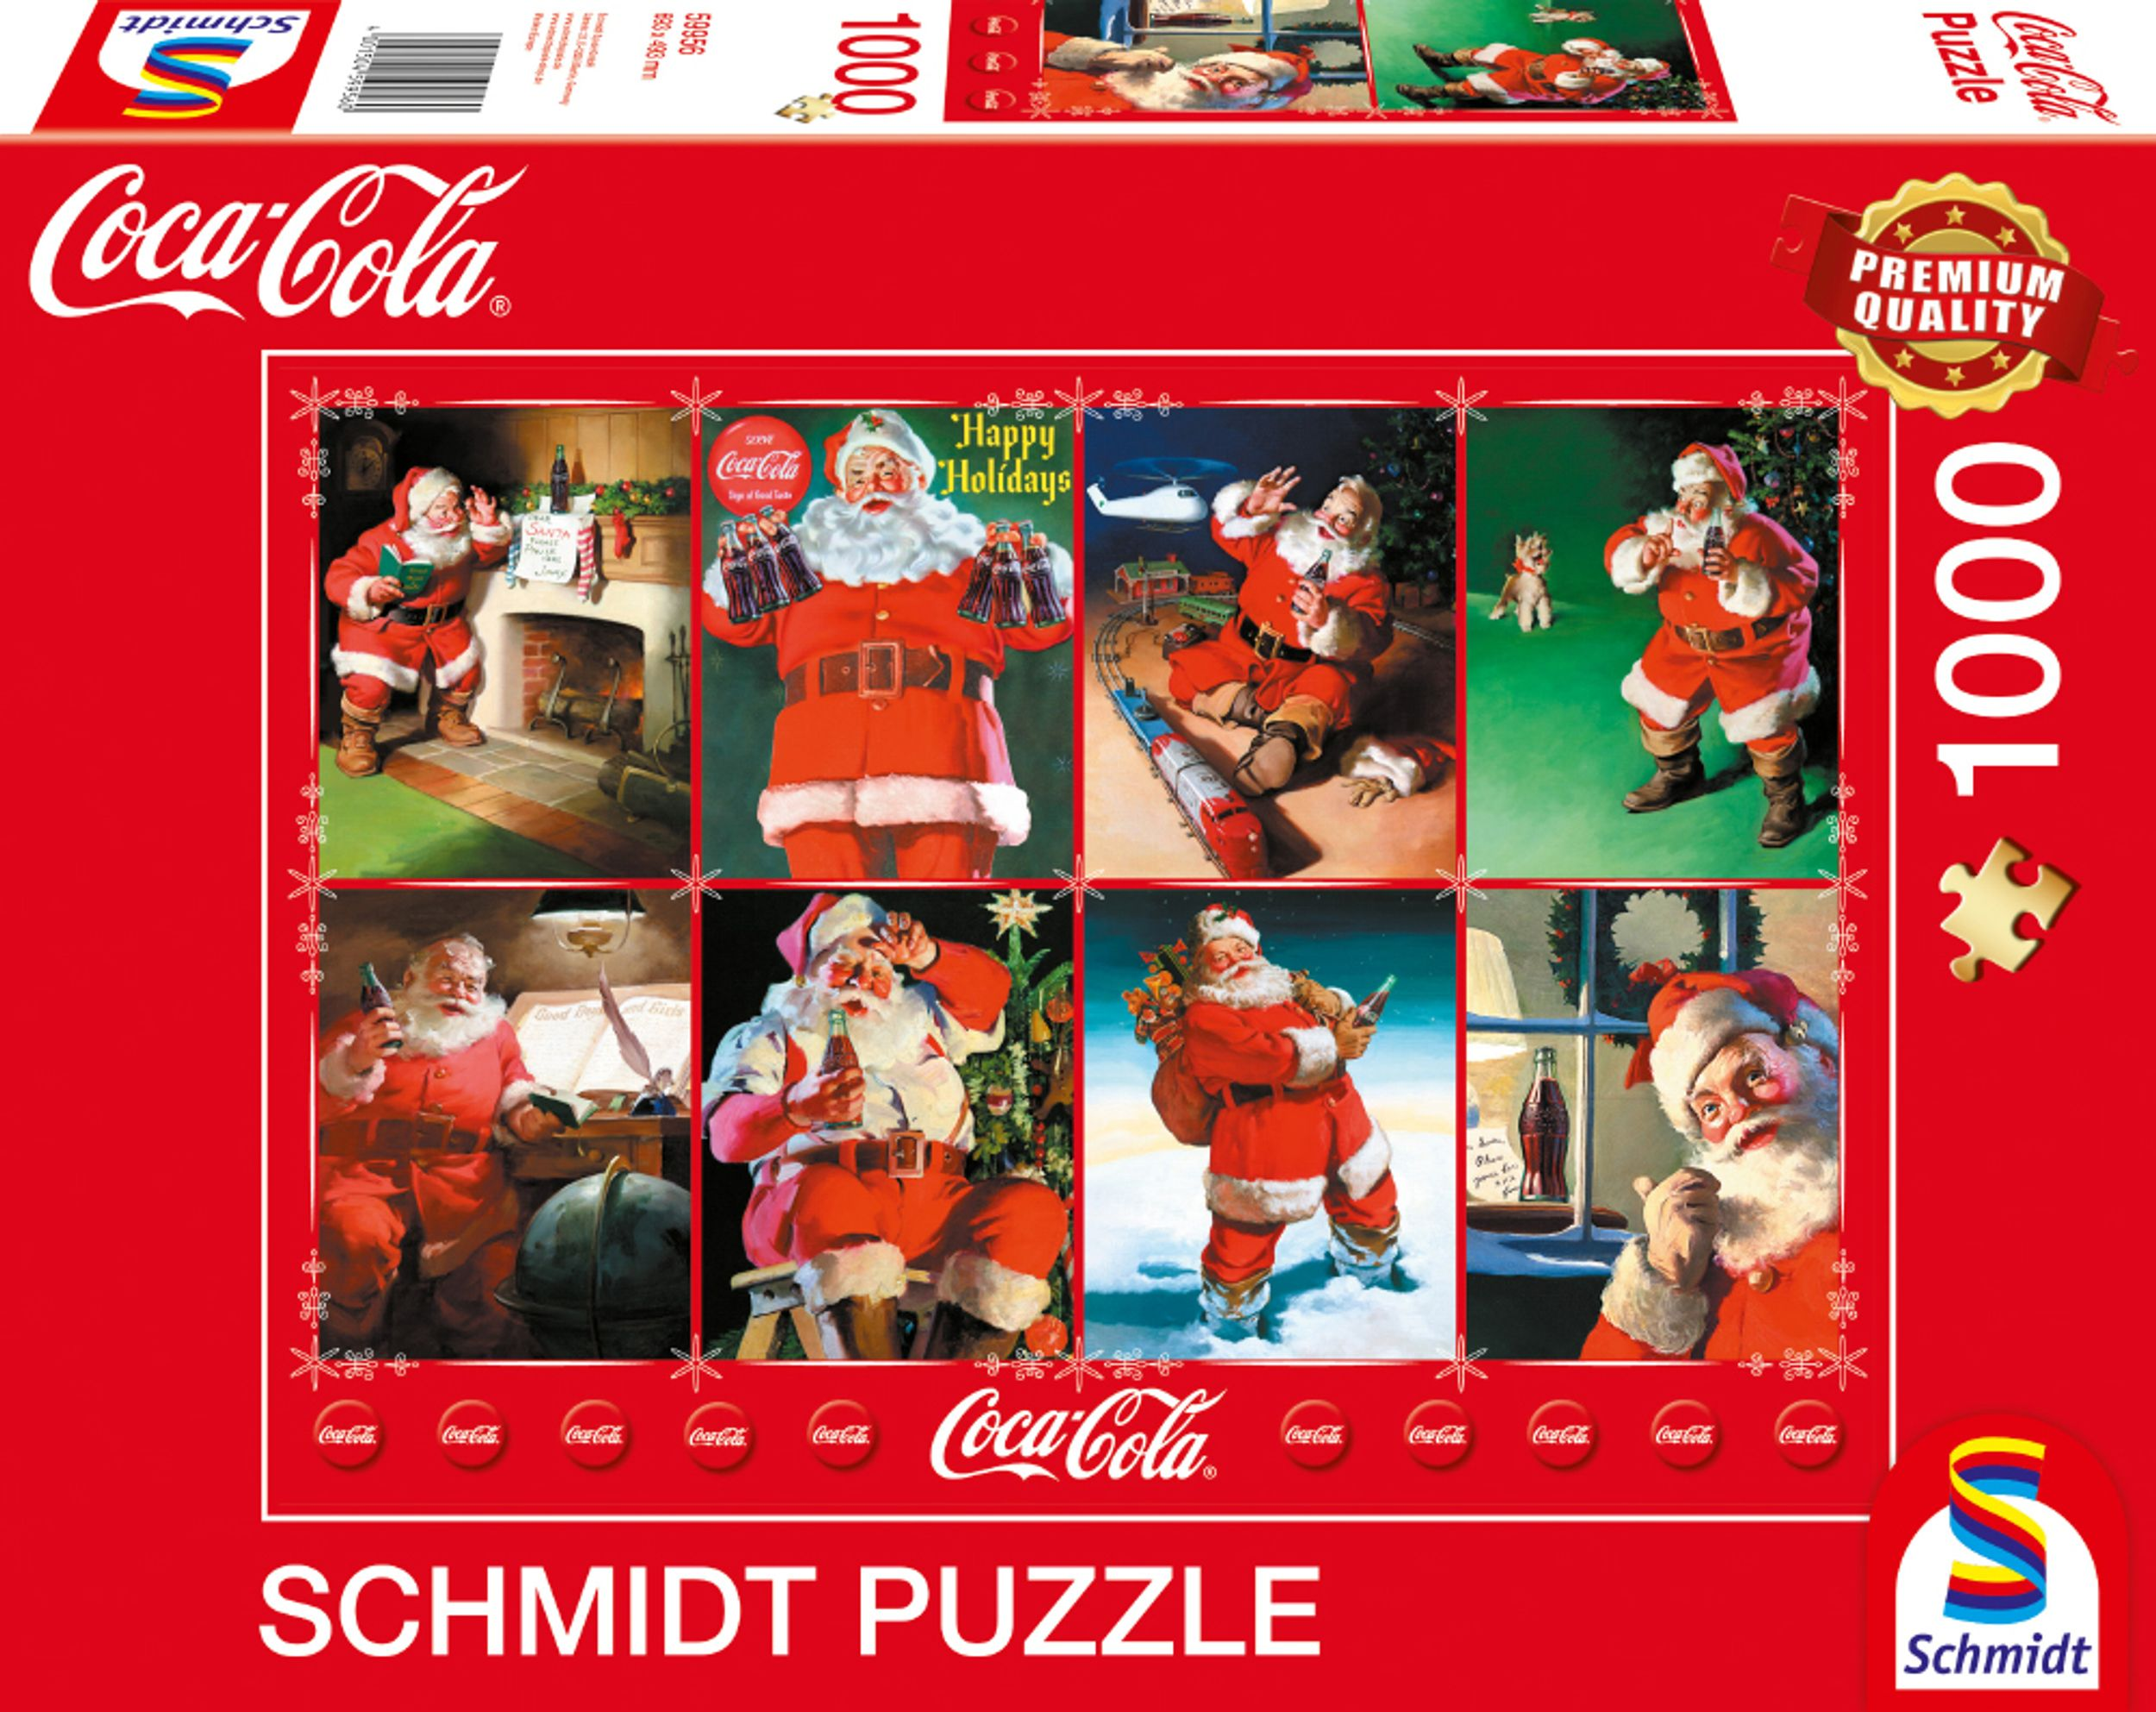 Cola SCHMIDT Santa Claus Puzzle Coca SPIELE